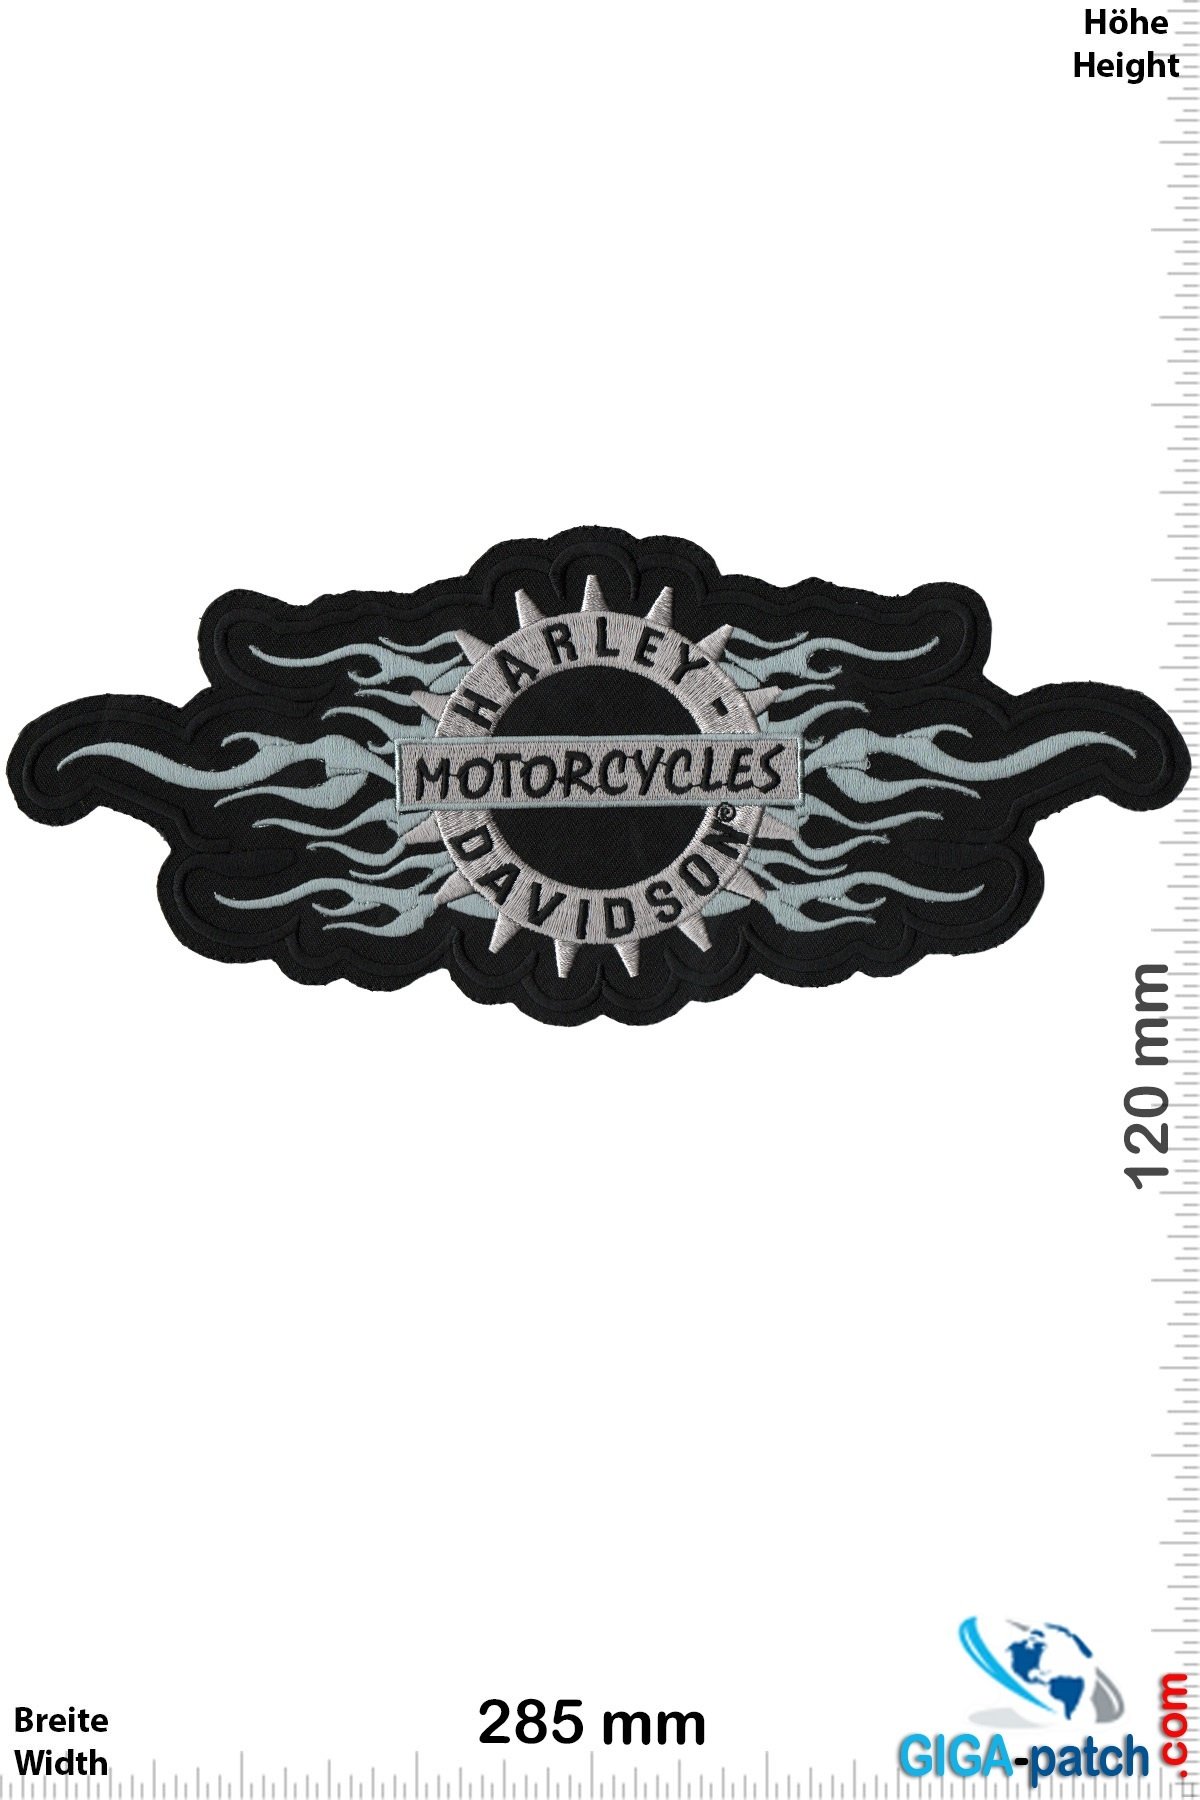 Harley Davidson Harley Davidson Motorcycles - 28 cm -BIG